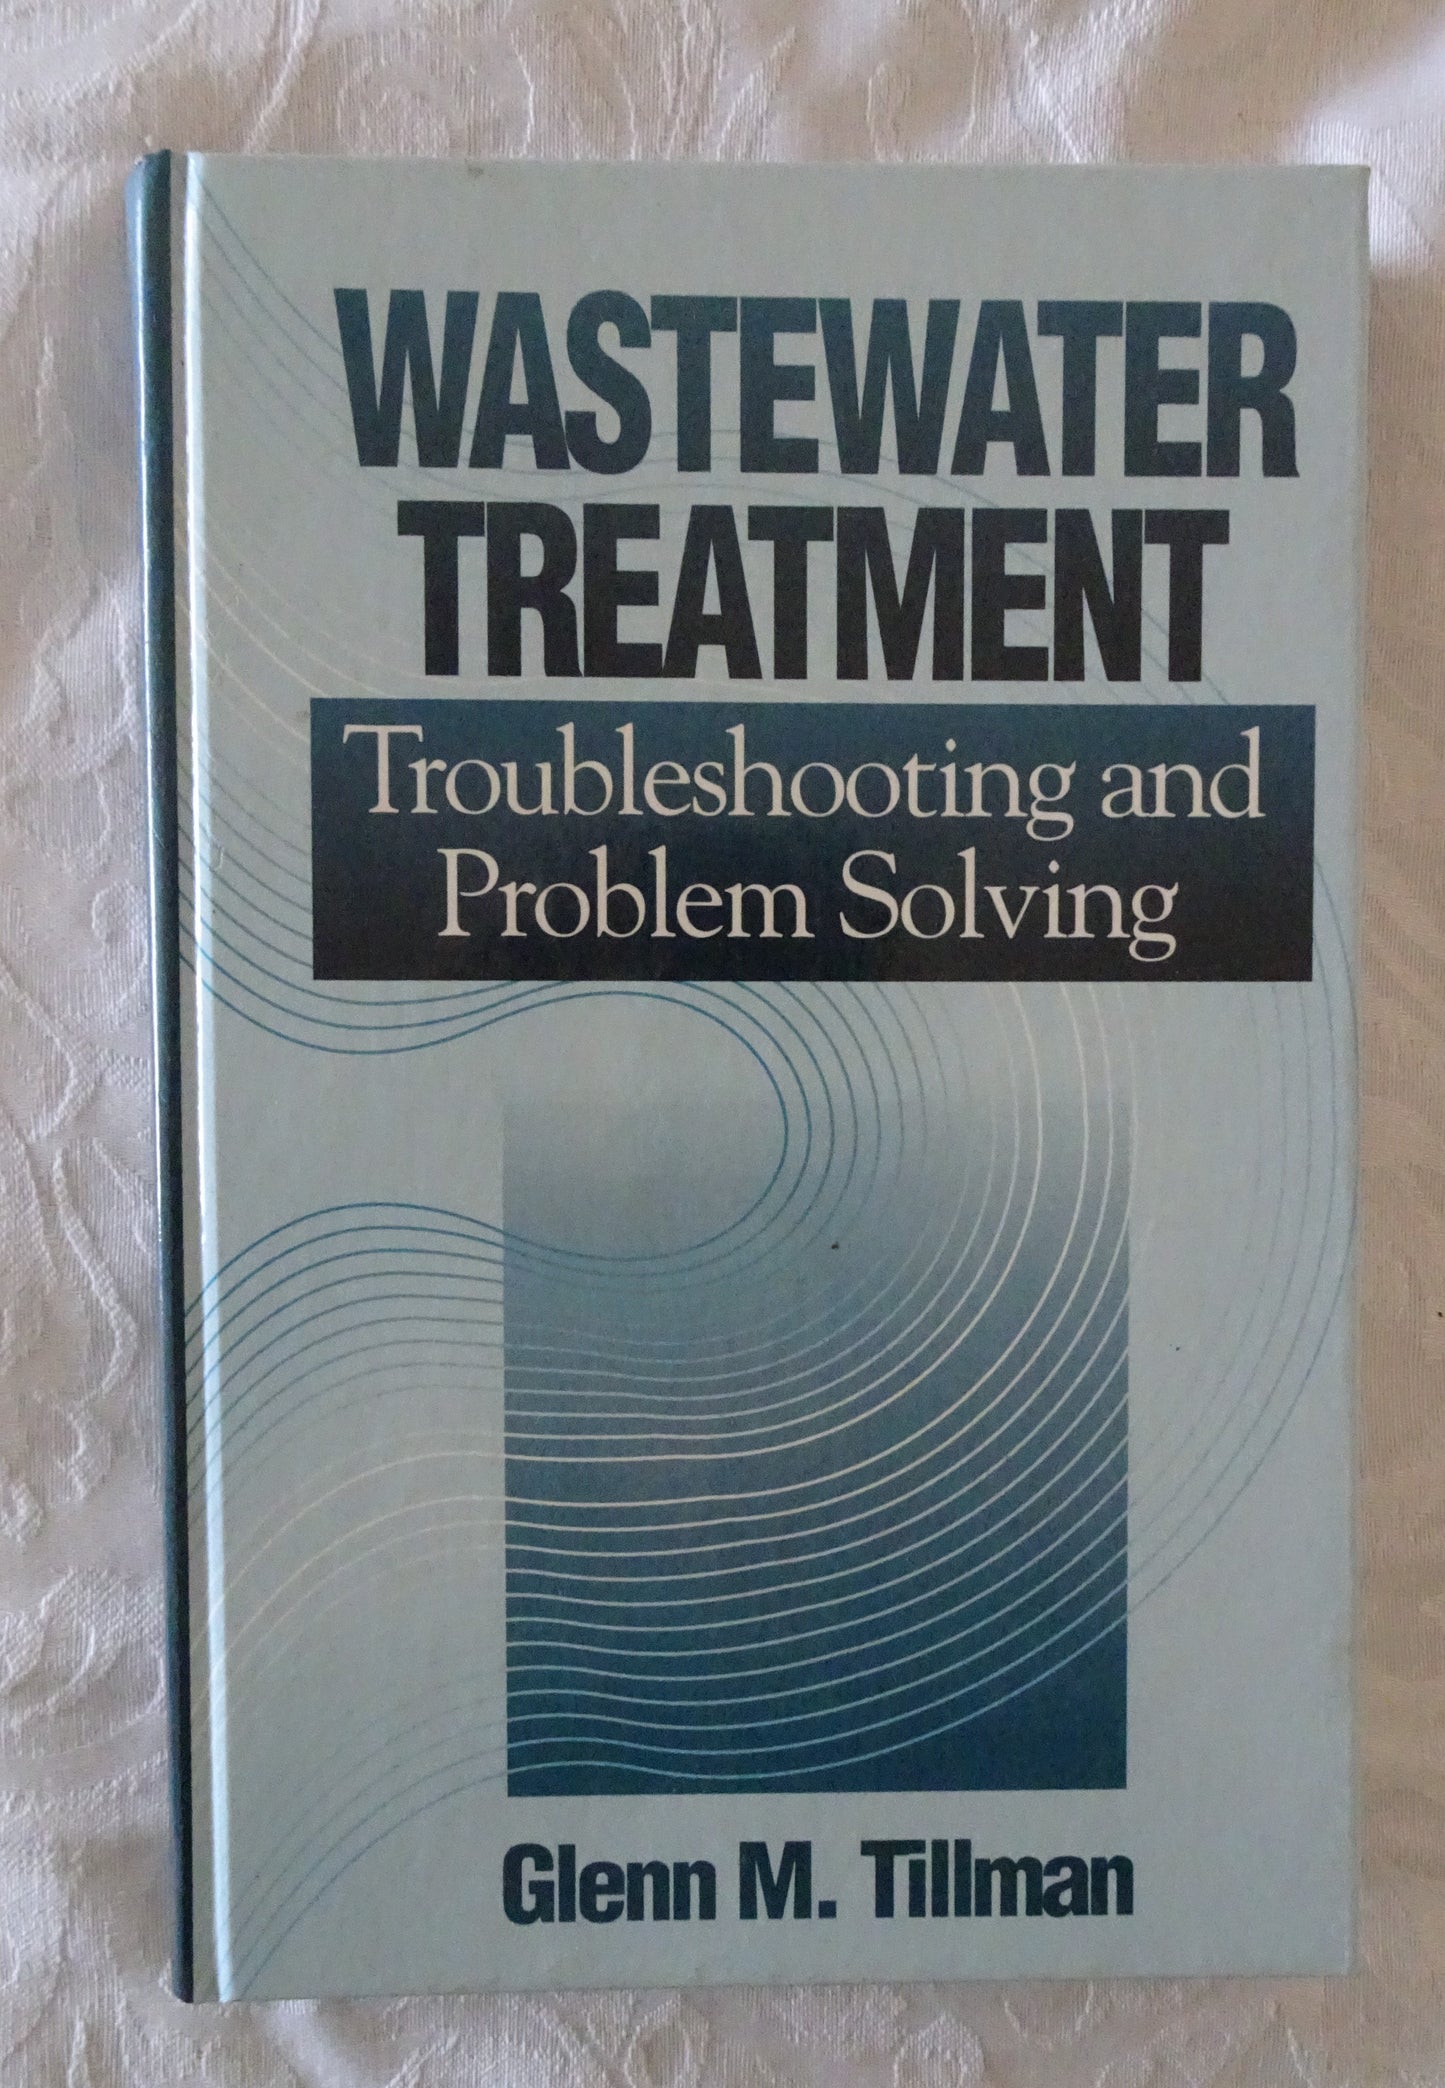 Wastewater Treatment by Glenn M. Tillman